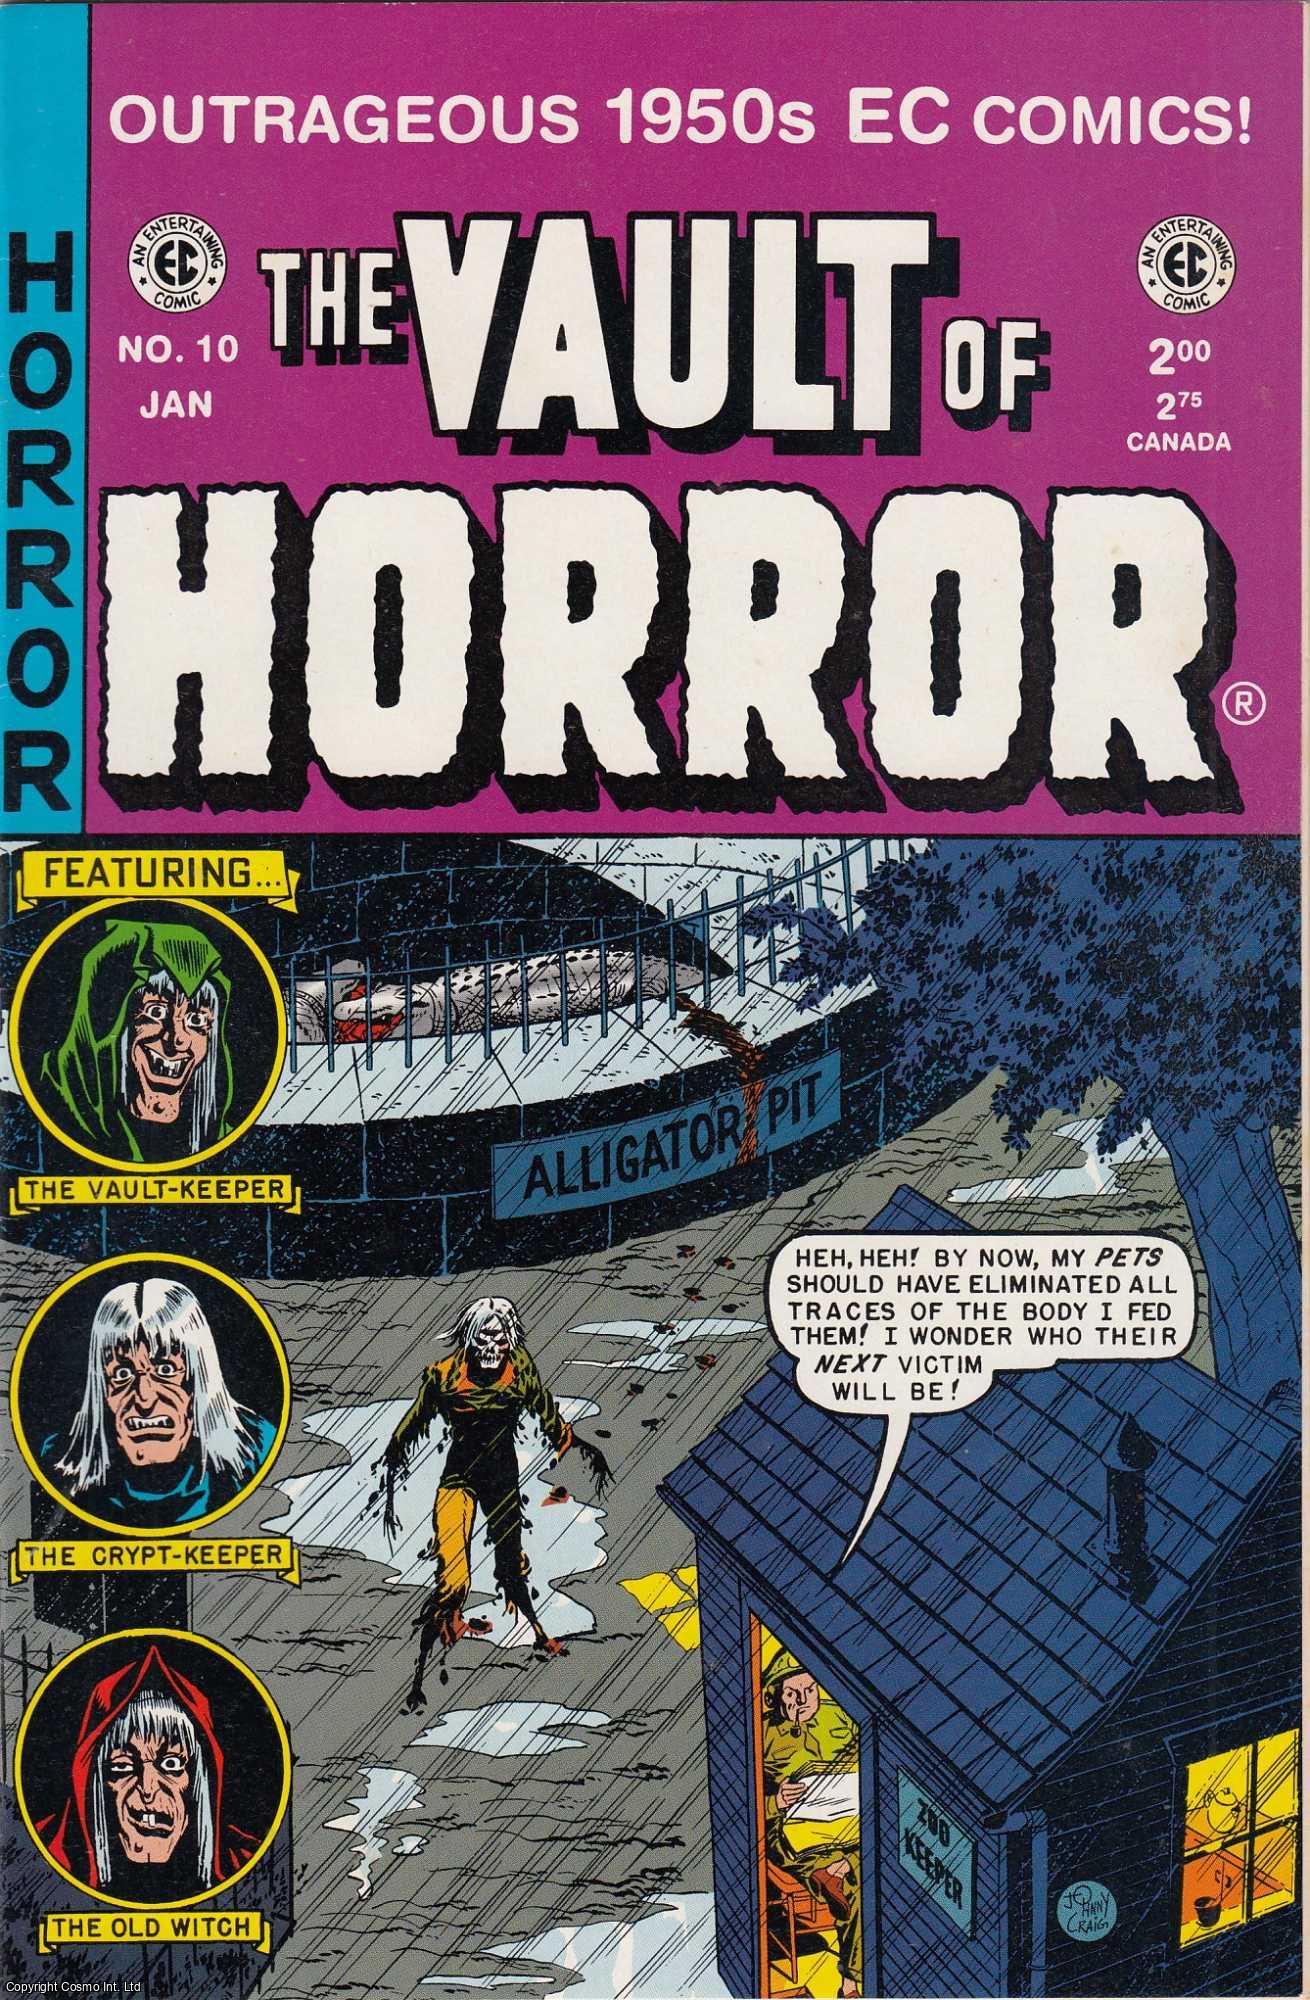 EC Comics - The Vault of Horror. Issue #10. EC Comics Gemstone Publishing Reprint, January 1995.